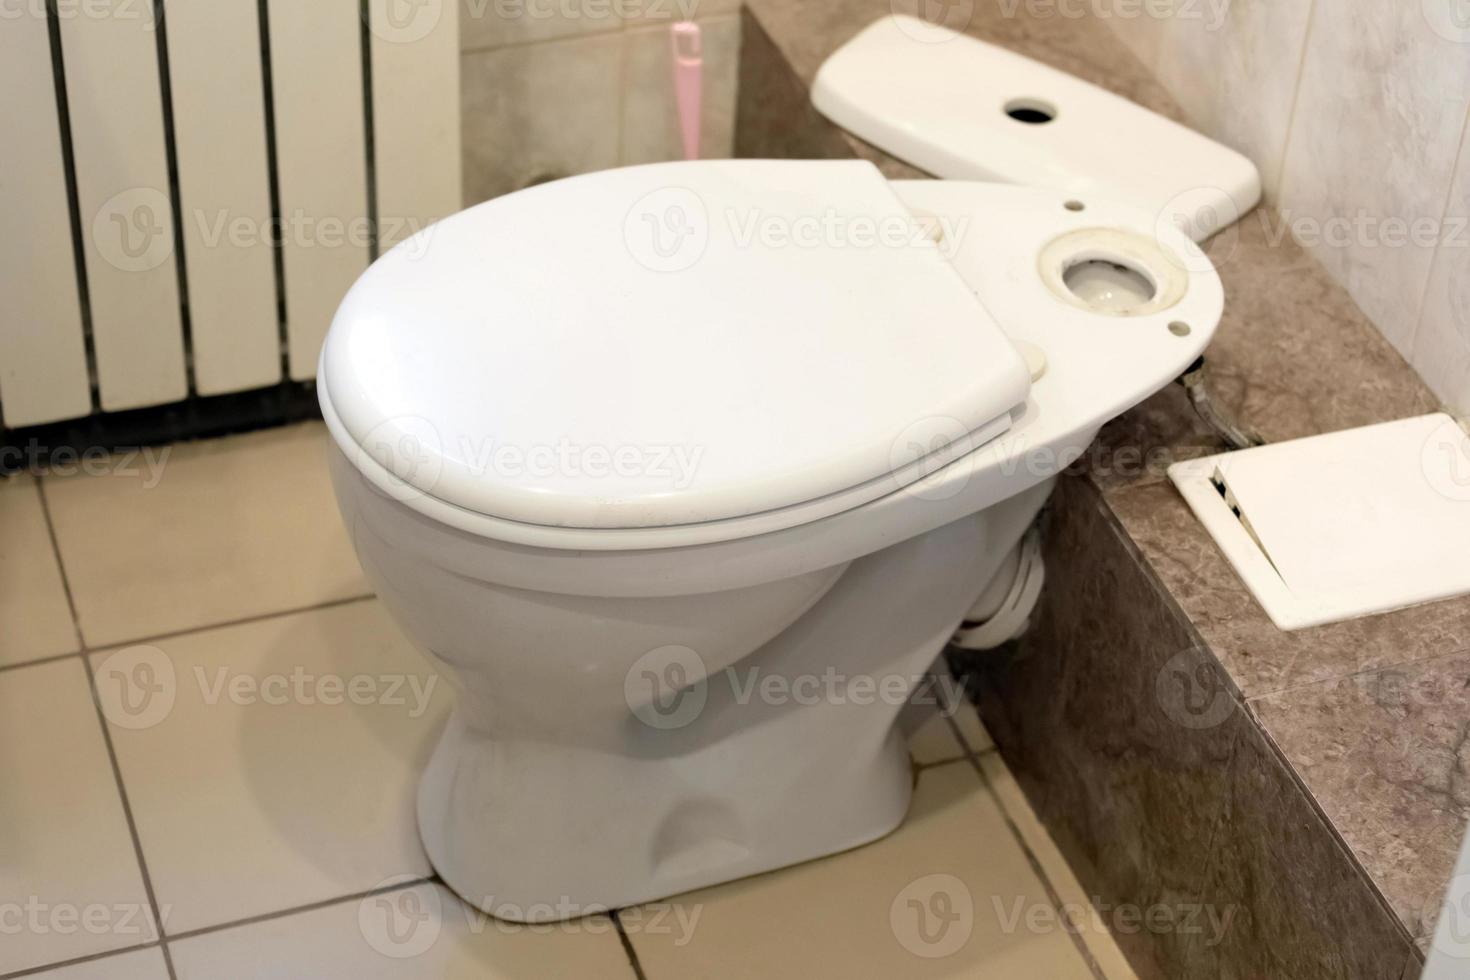 toilet kom in een huis toilet, detailopname foto. foto